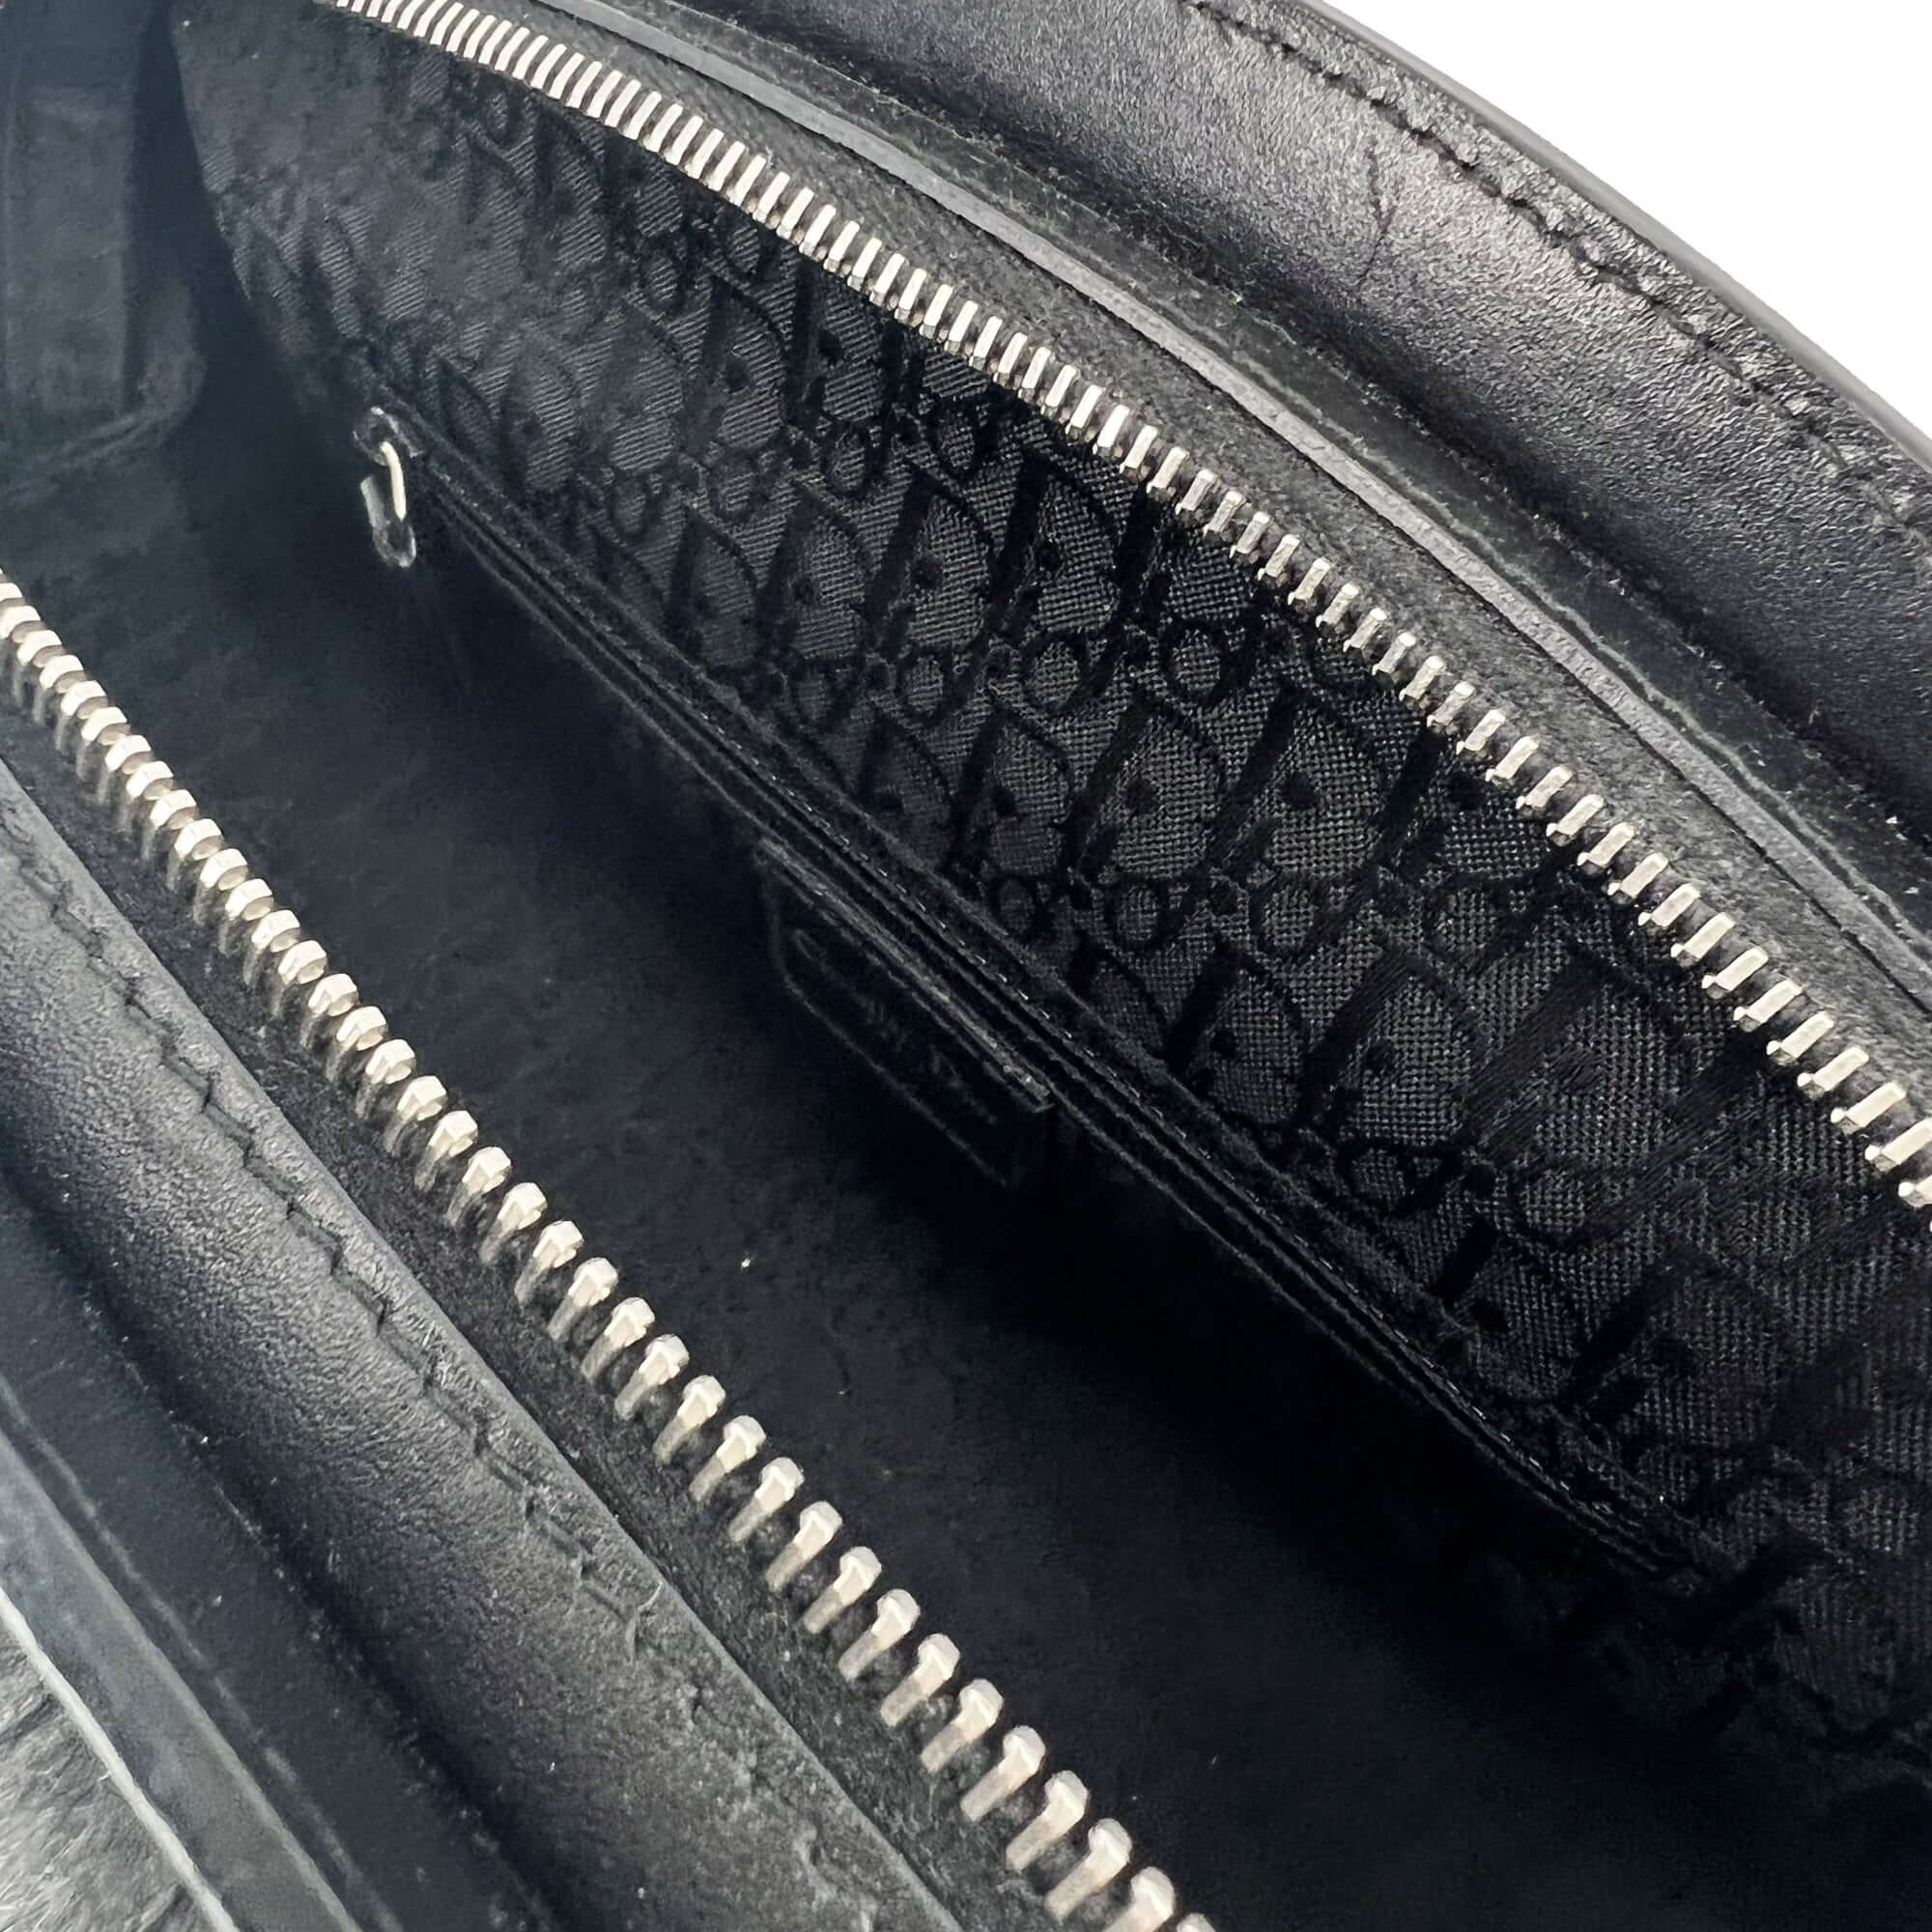 Christian Dior Black Diorissimo Fur and Leather Frame satchel